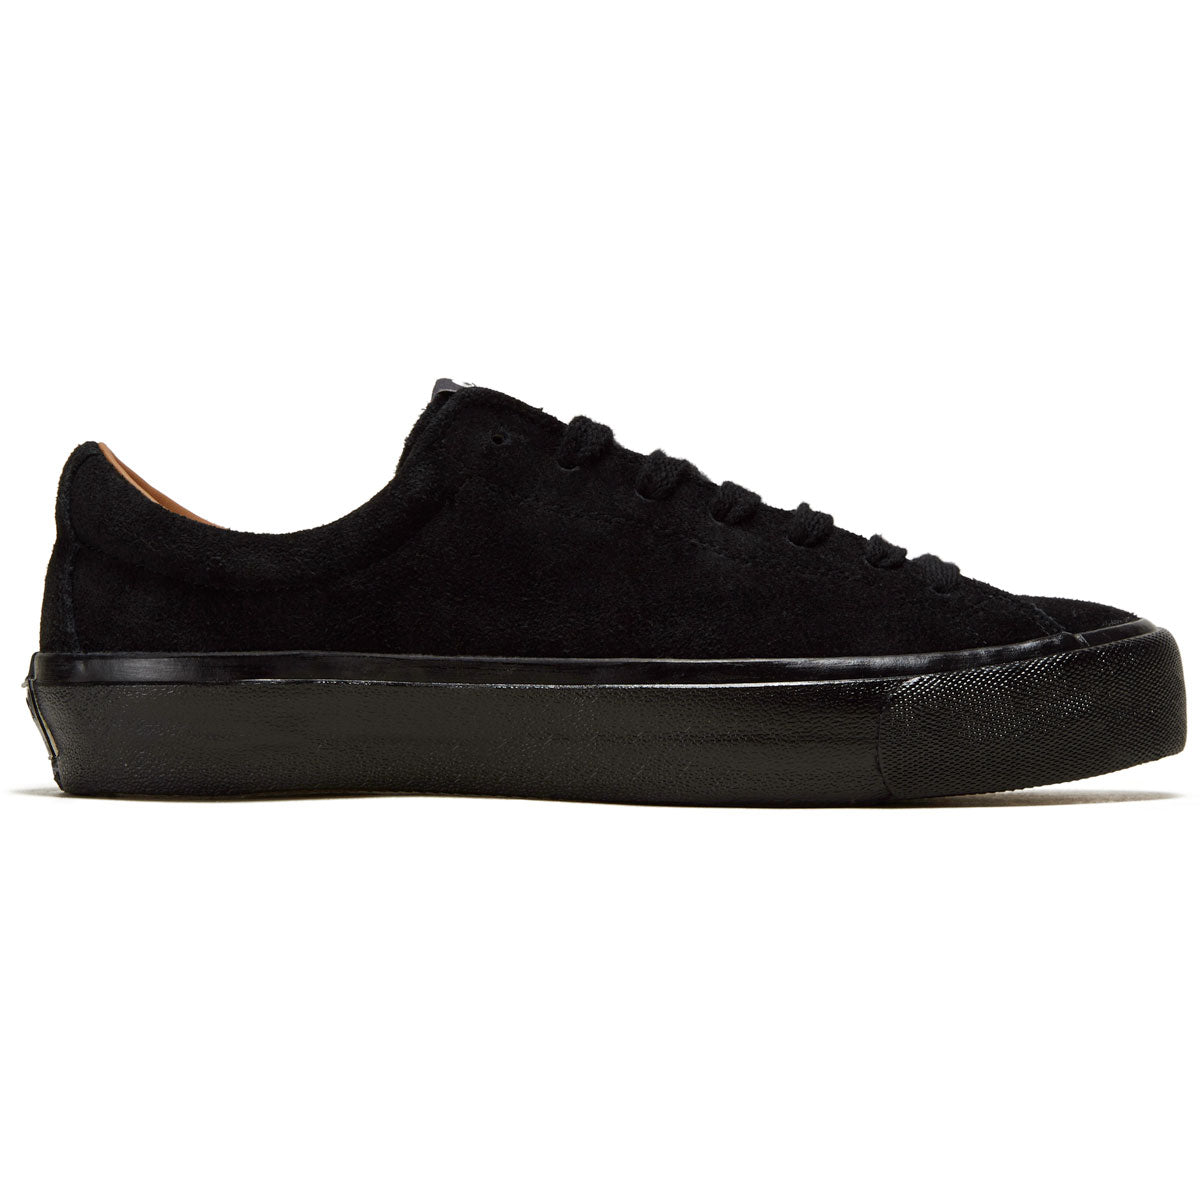 Last Resort AB VM003 Suede Lo Shoes - 3 x Black/Black image 1